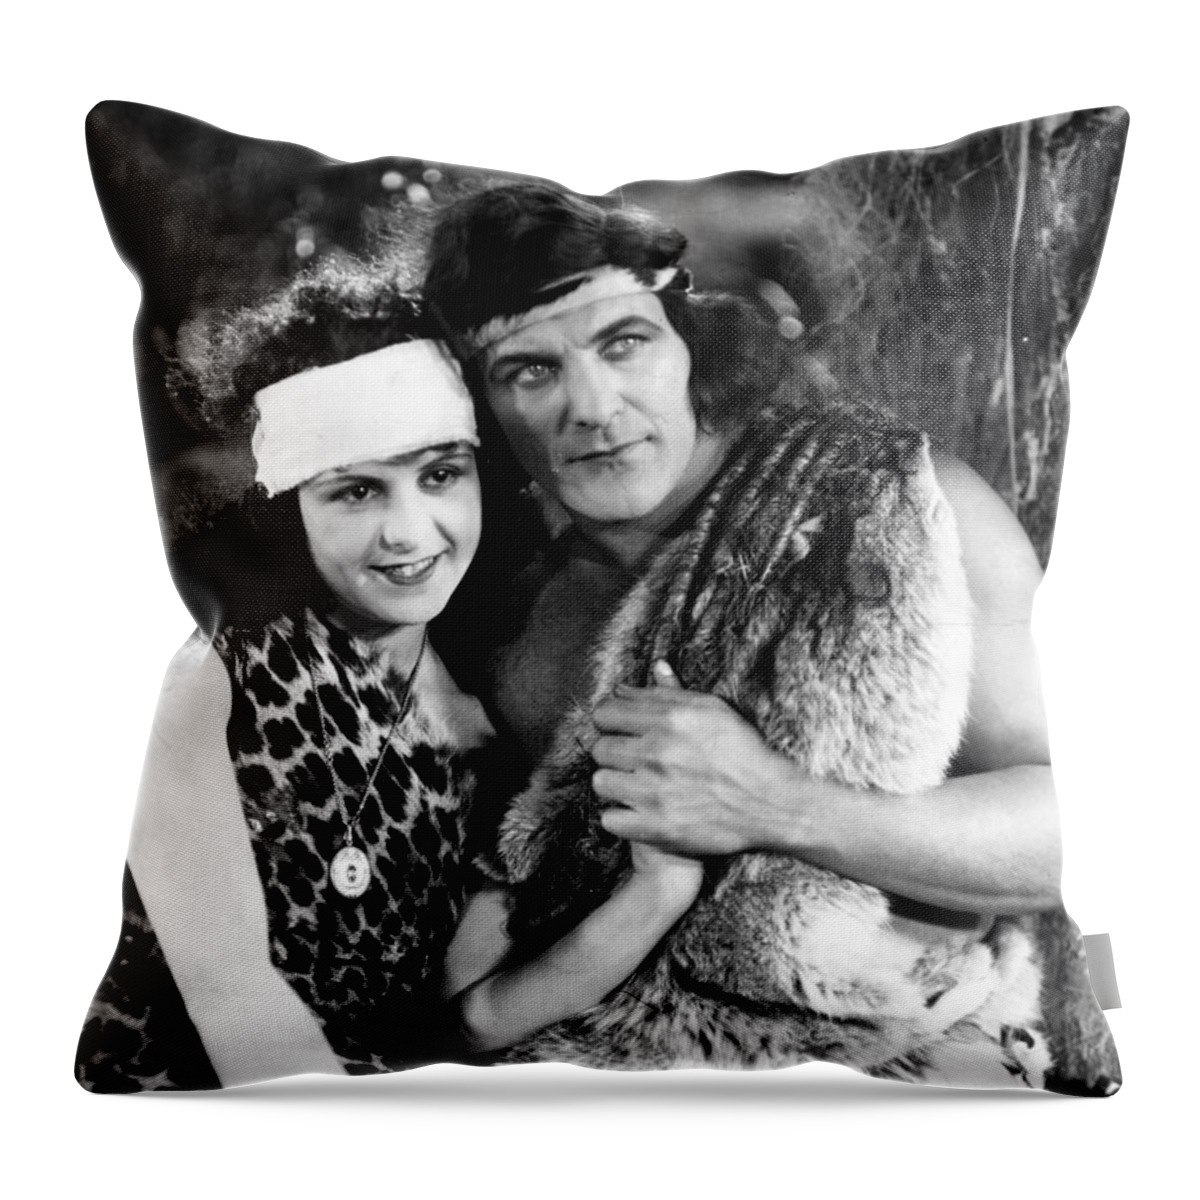 1918 Throw Pillow featuring the photograph Tarzan, 1918 by Granger